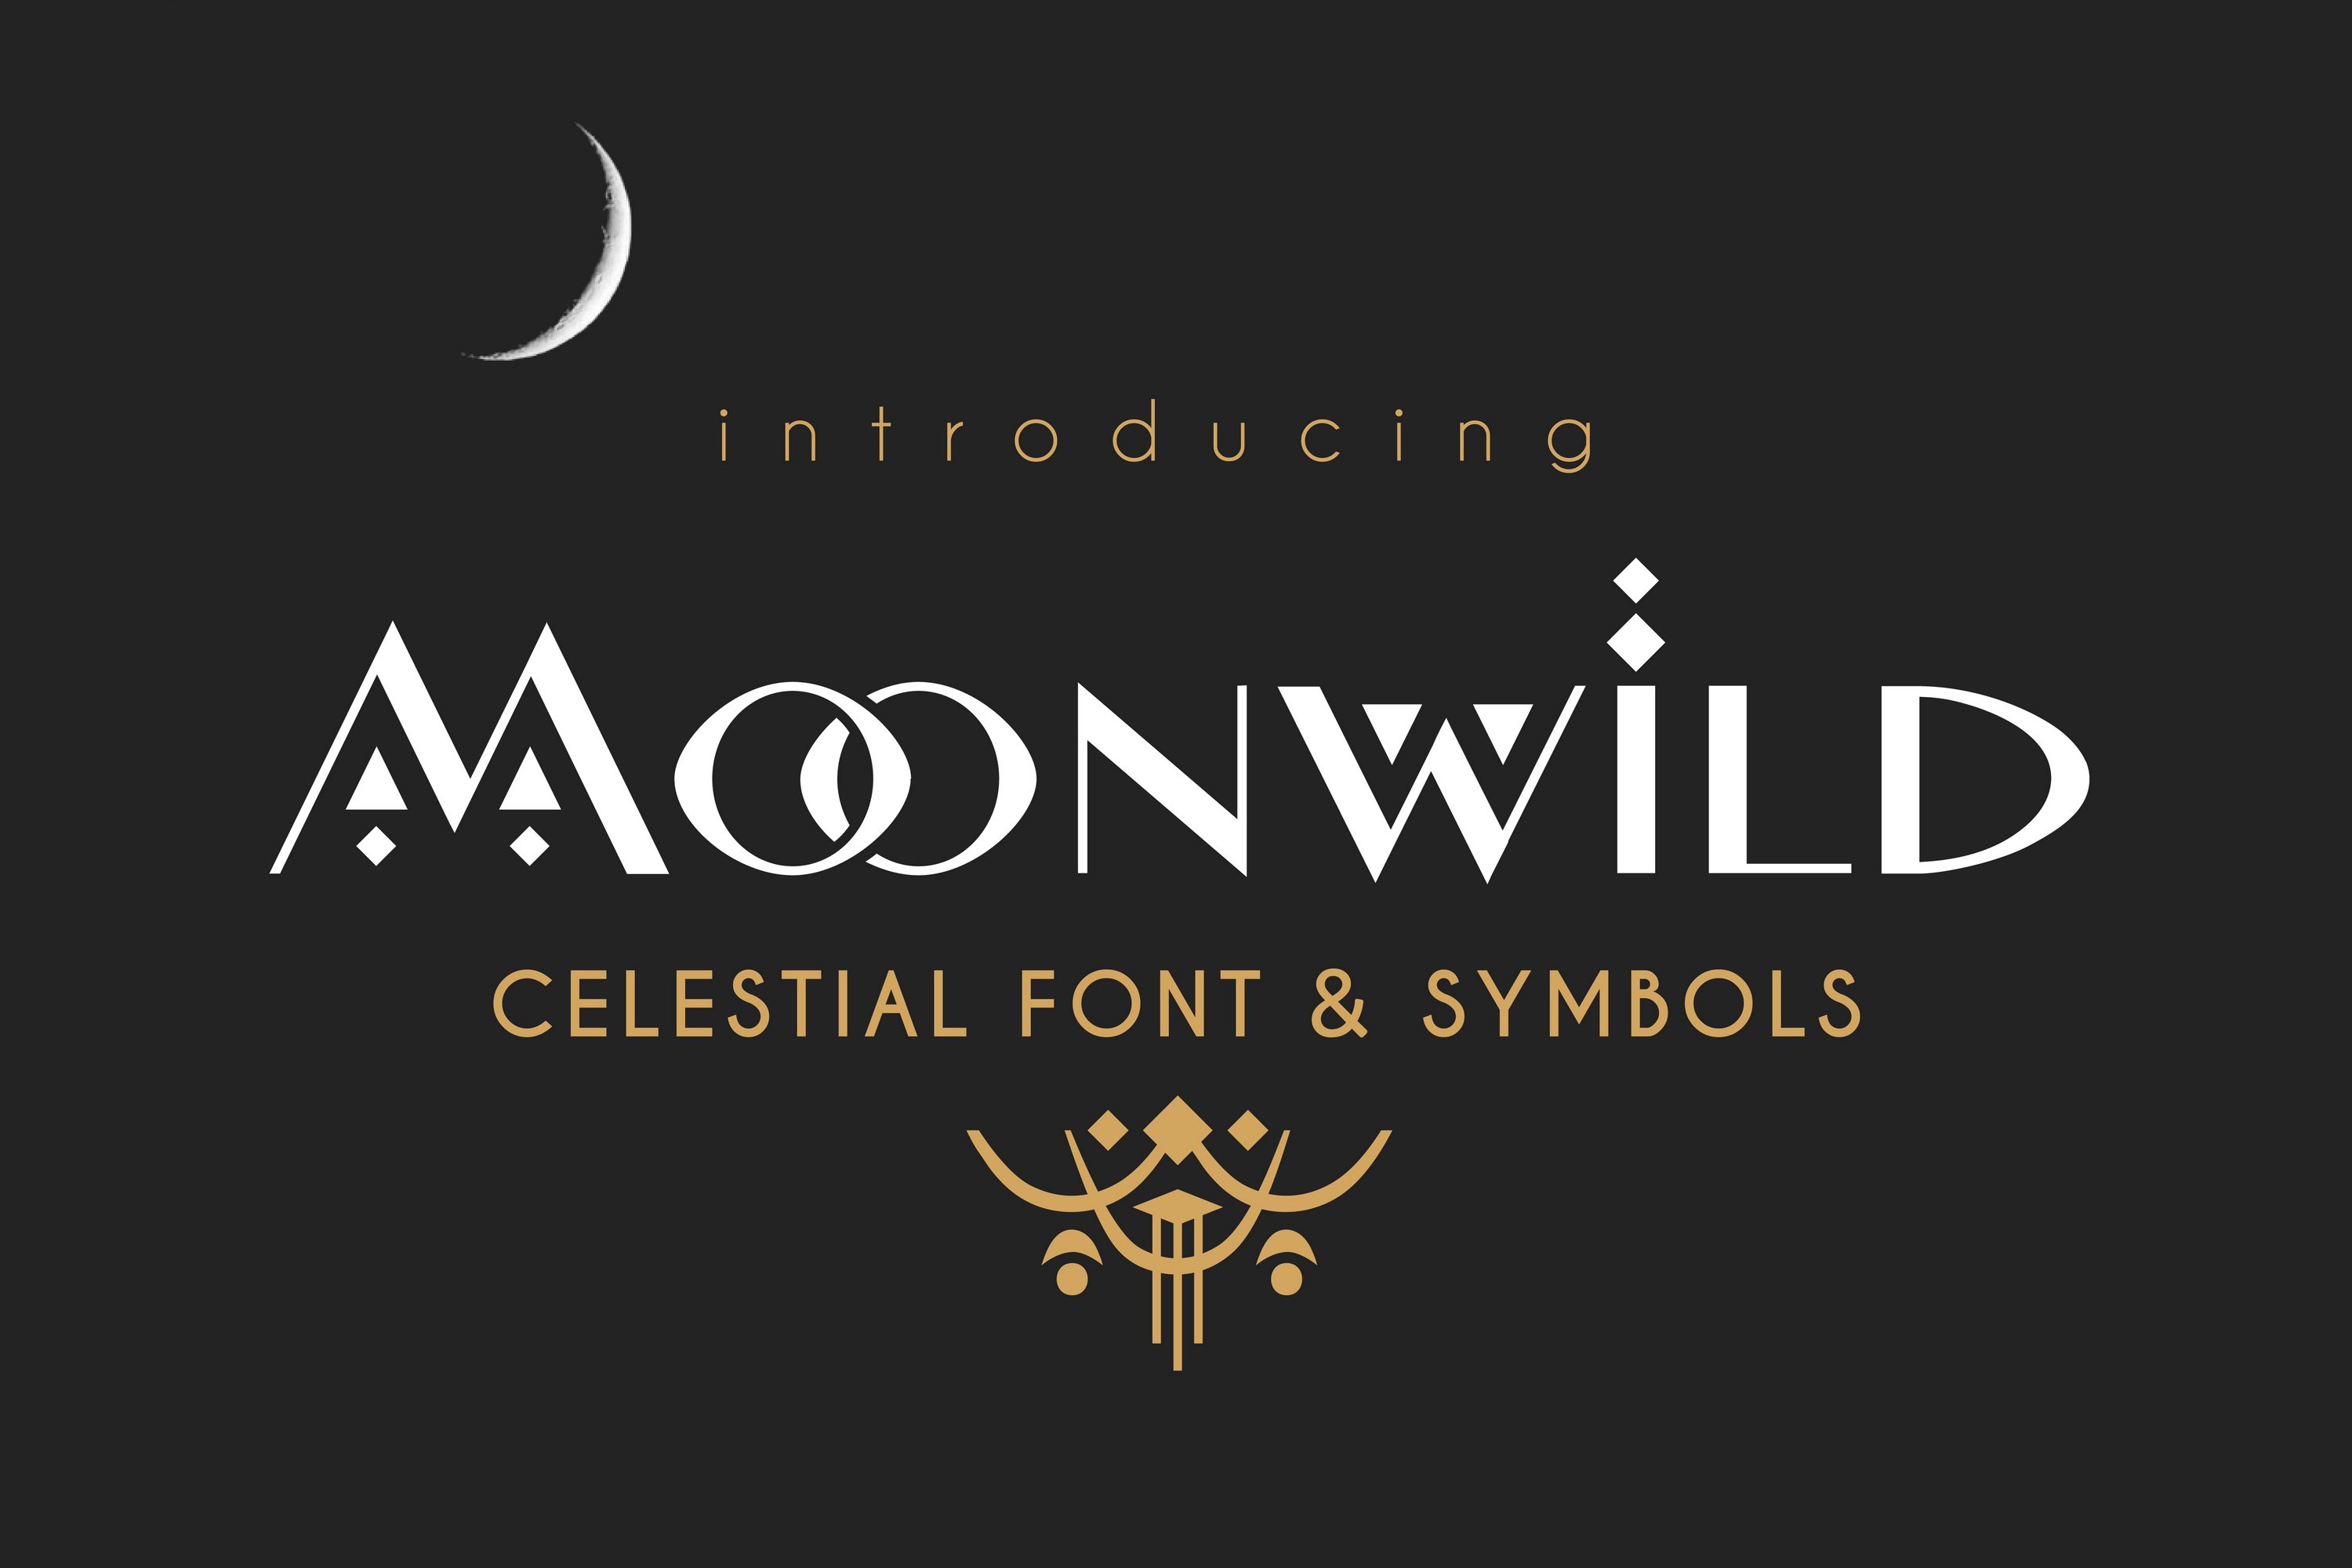 moonwild 994